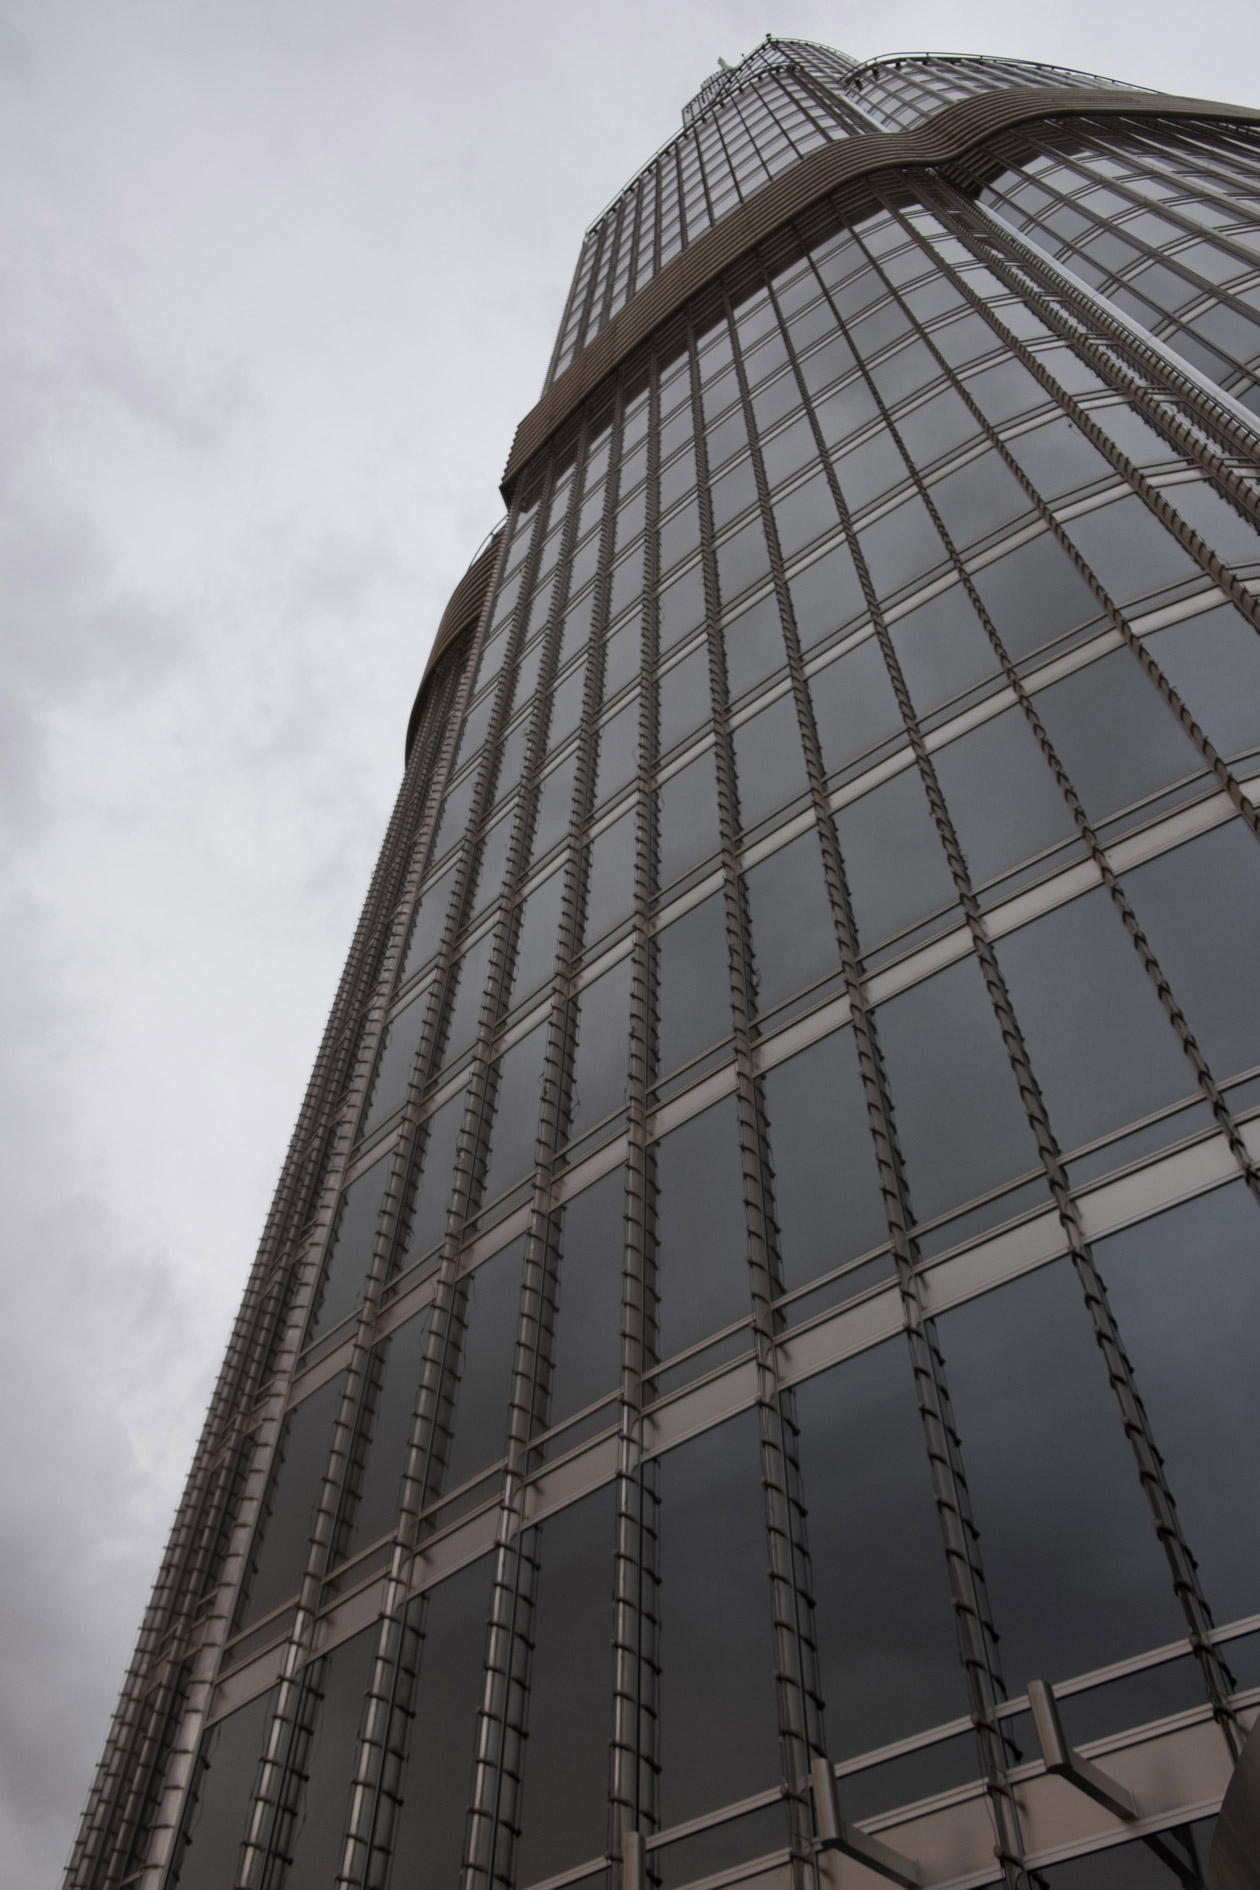 Looking up the Burj Khalifa